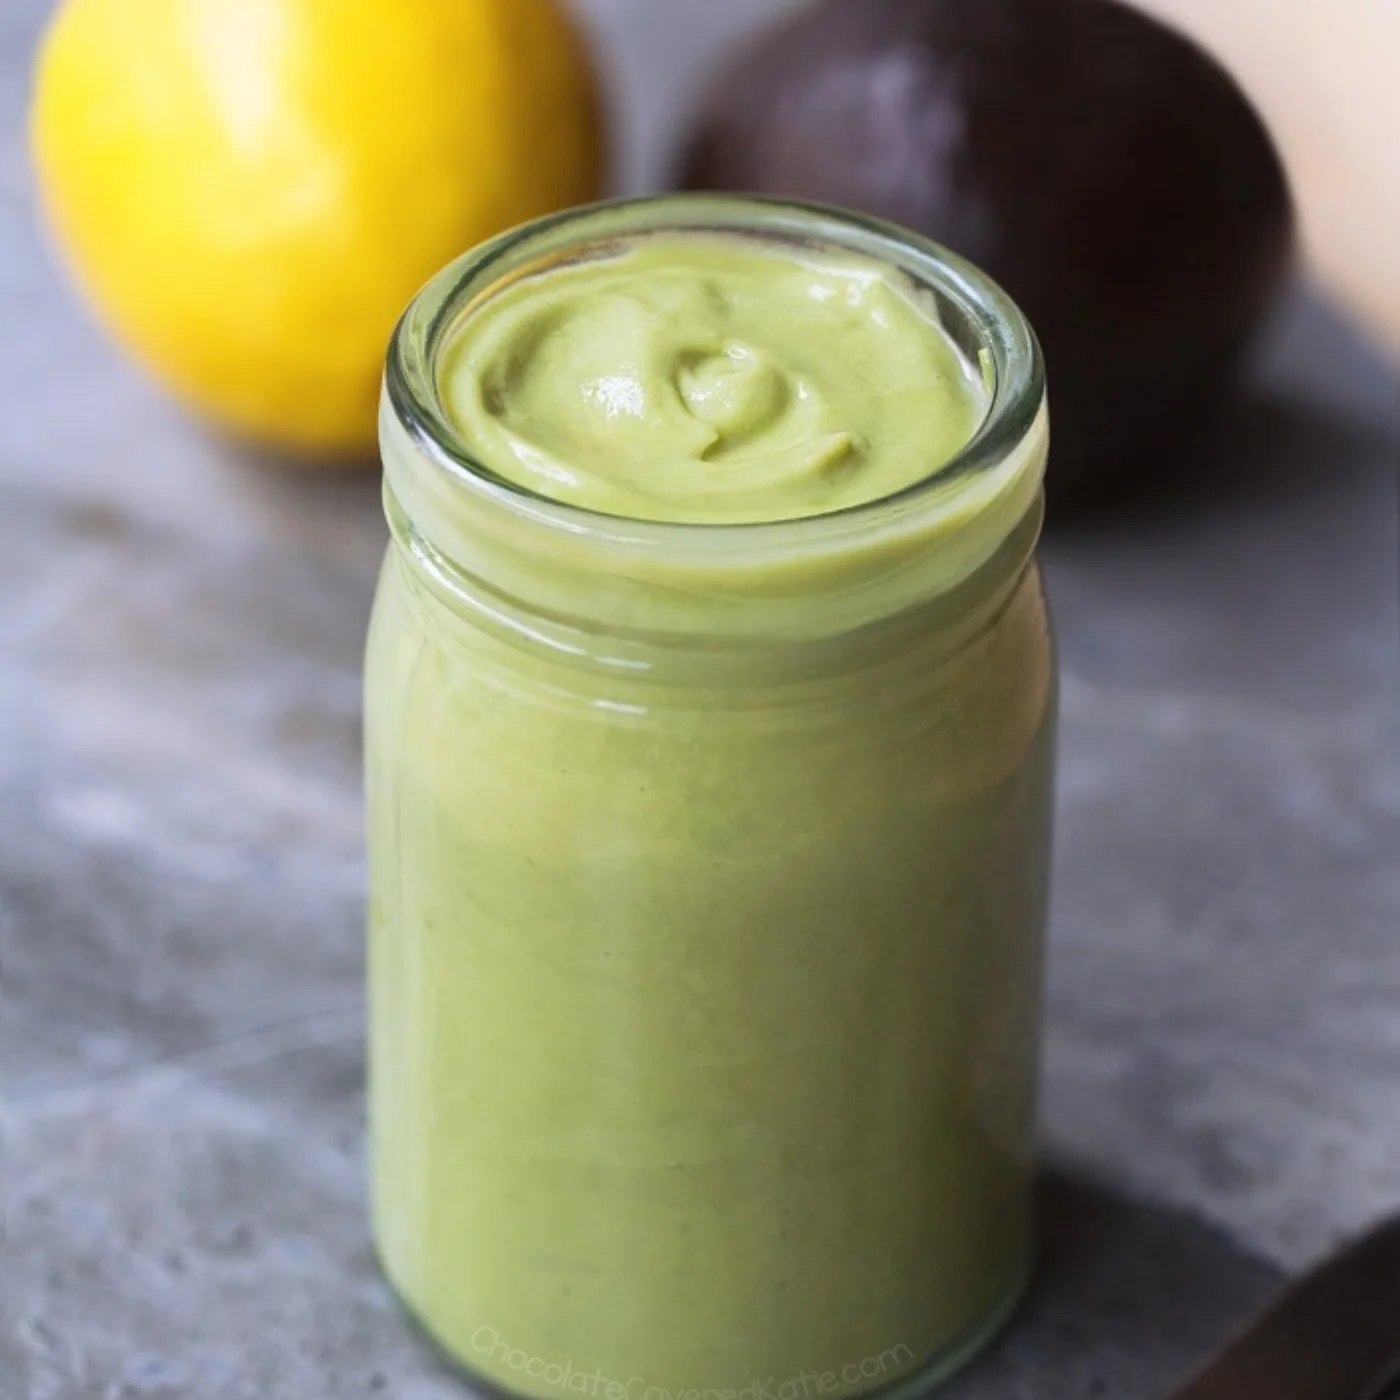  avocado mayo in a jar